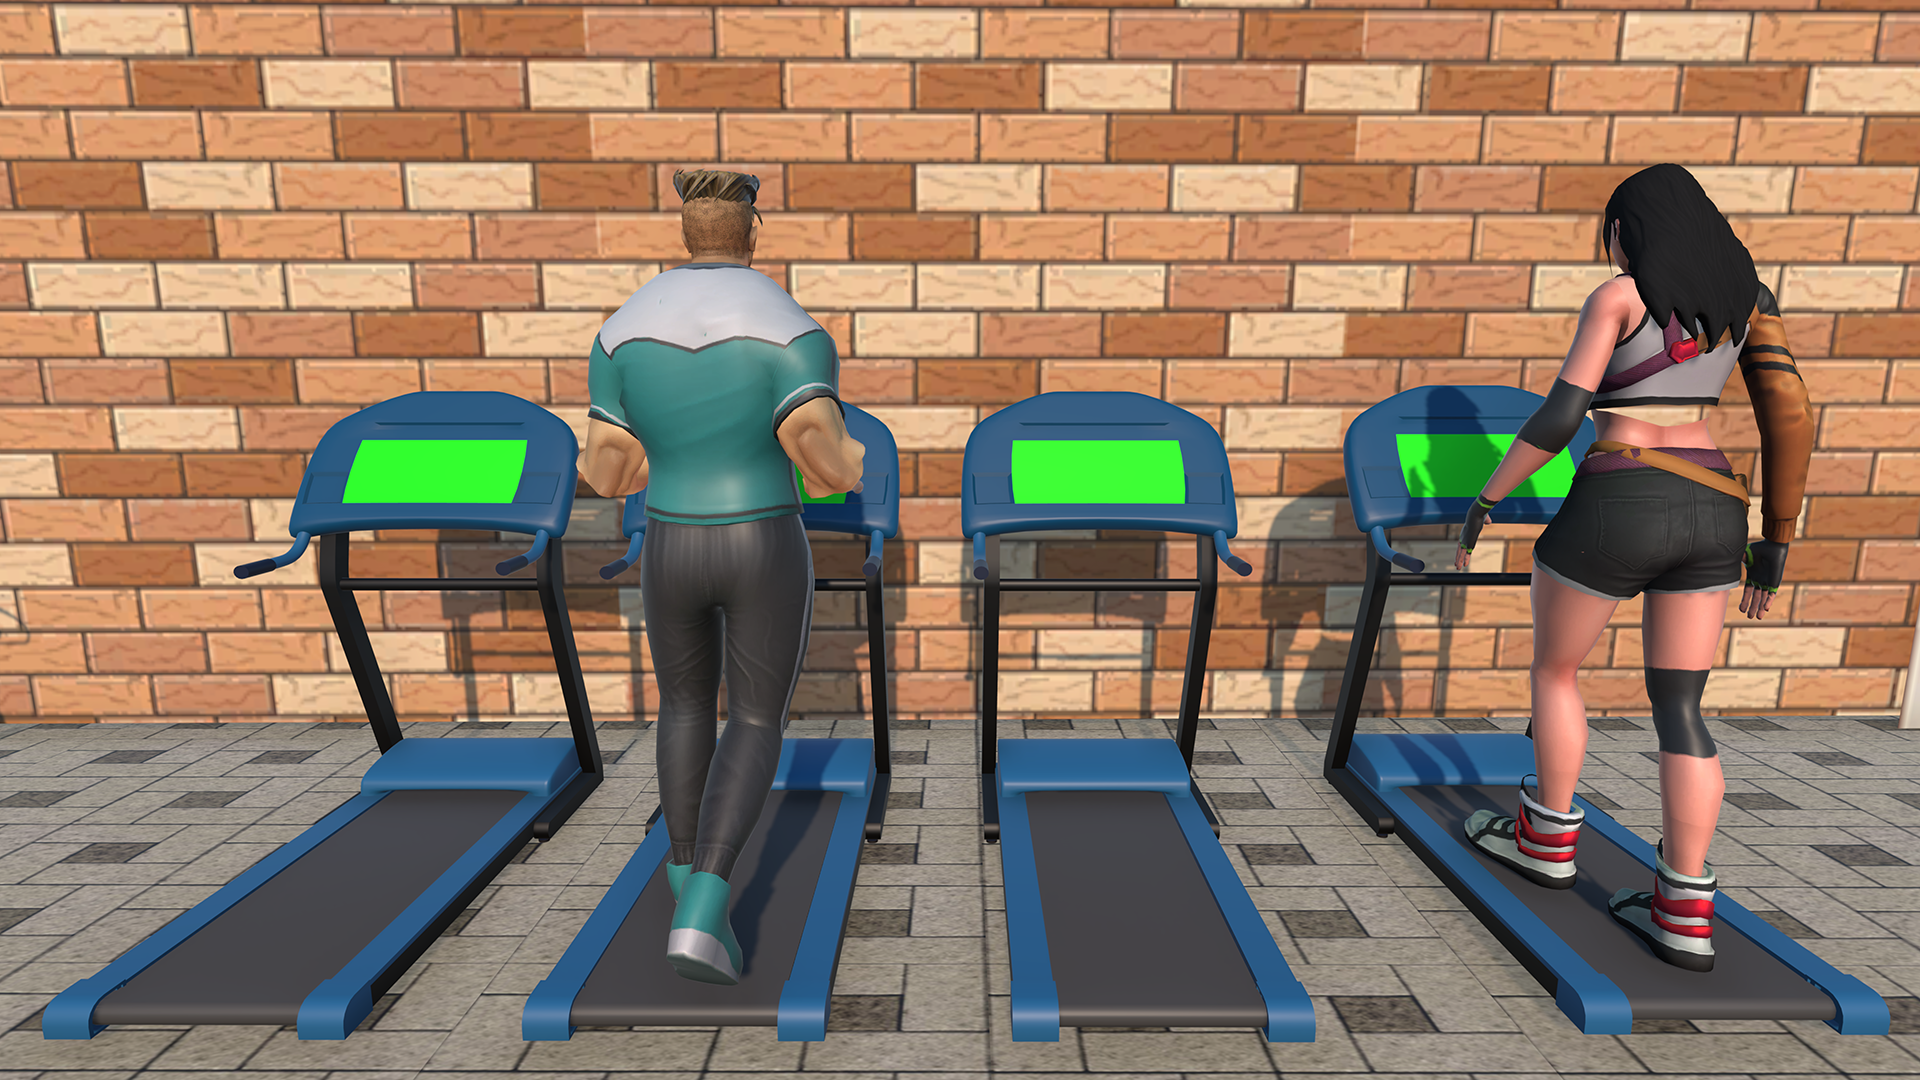 Gym Simulator : Gym Tycoon 24のキャプチャ